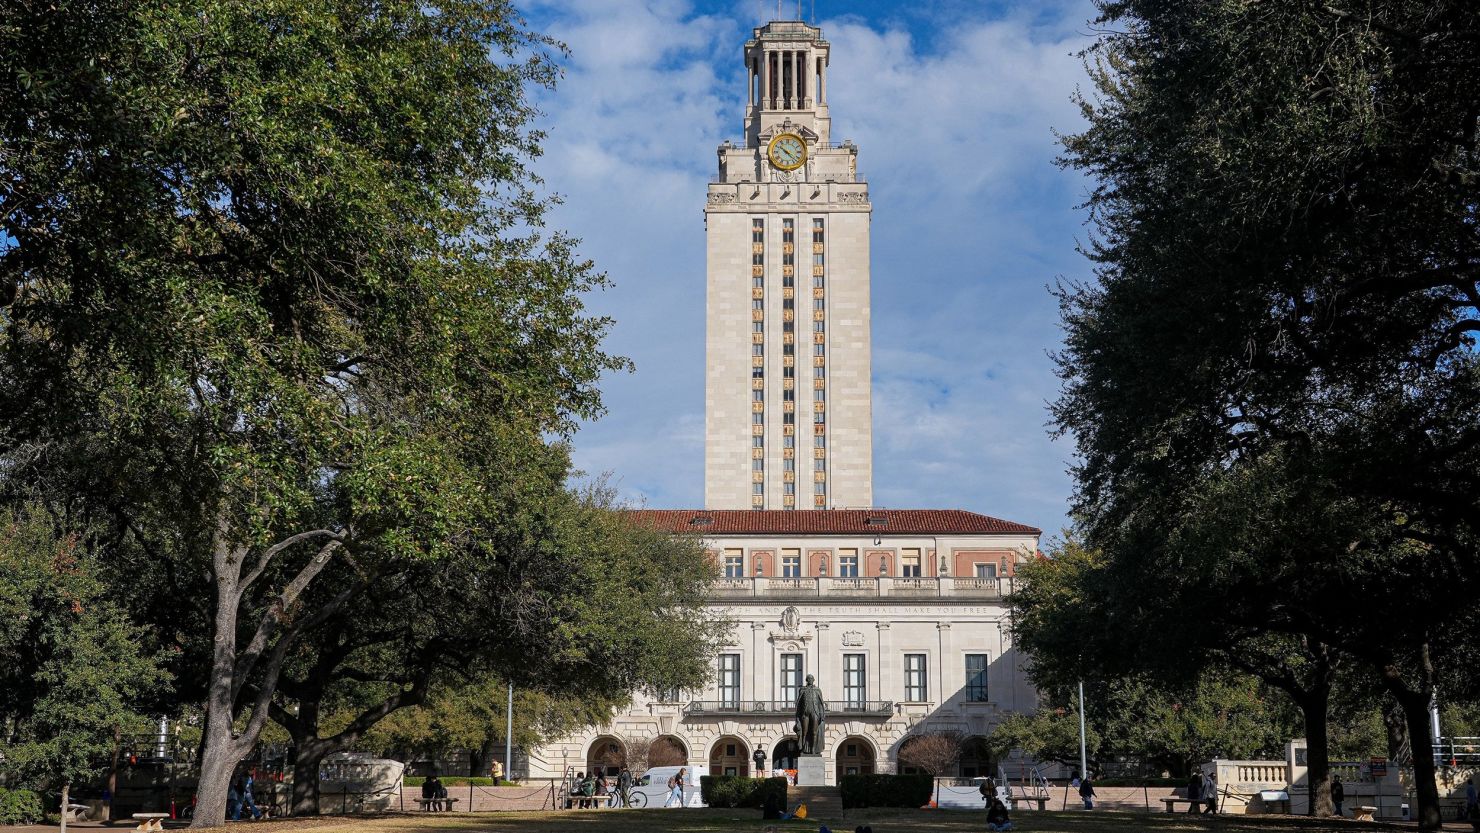 The landmark UT Tower on the University of Texas campus in Austin.